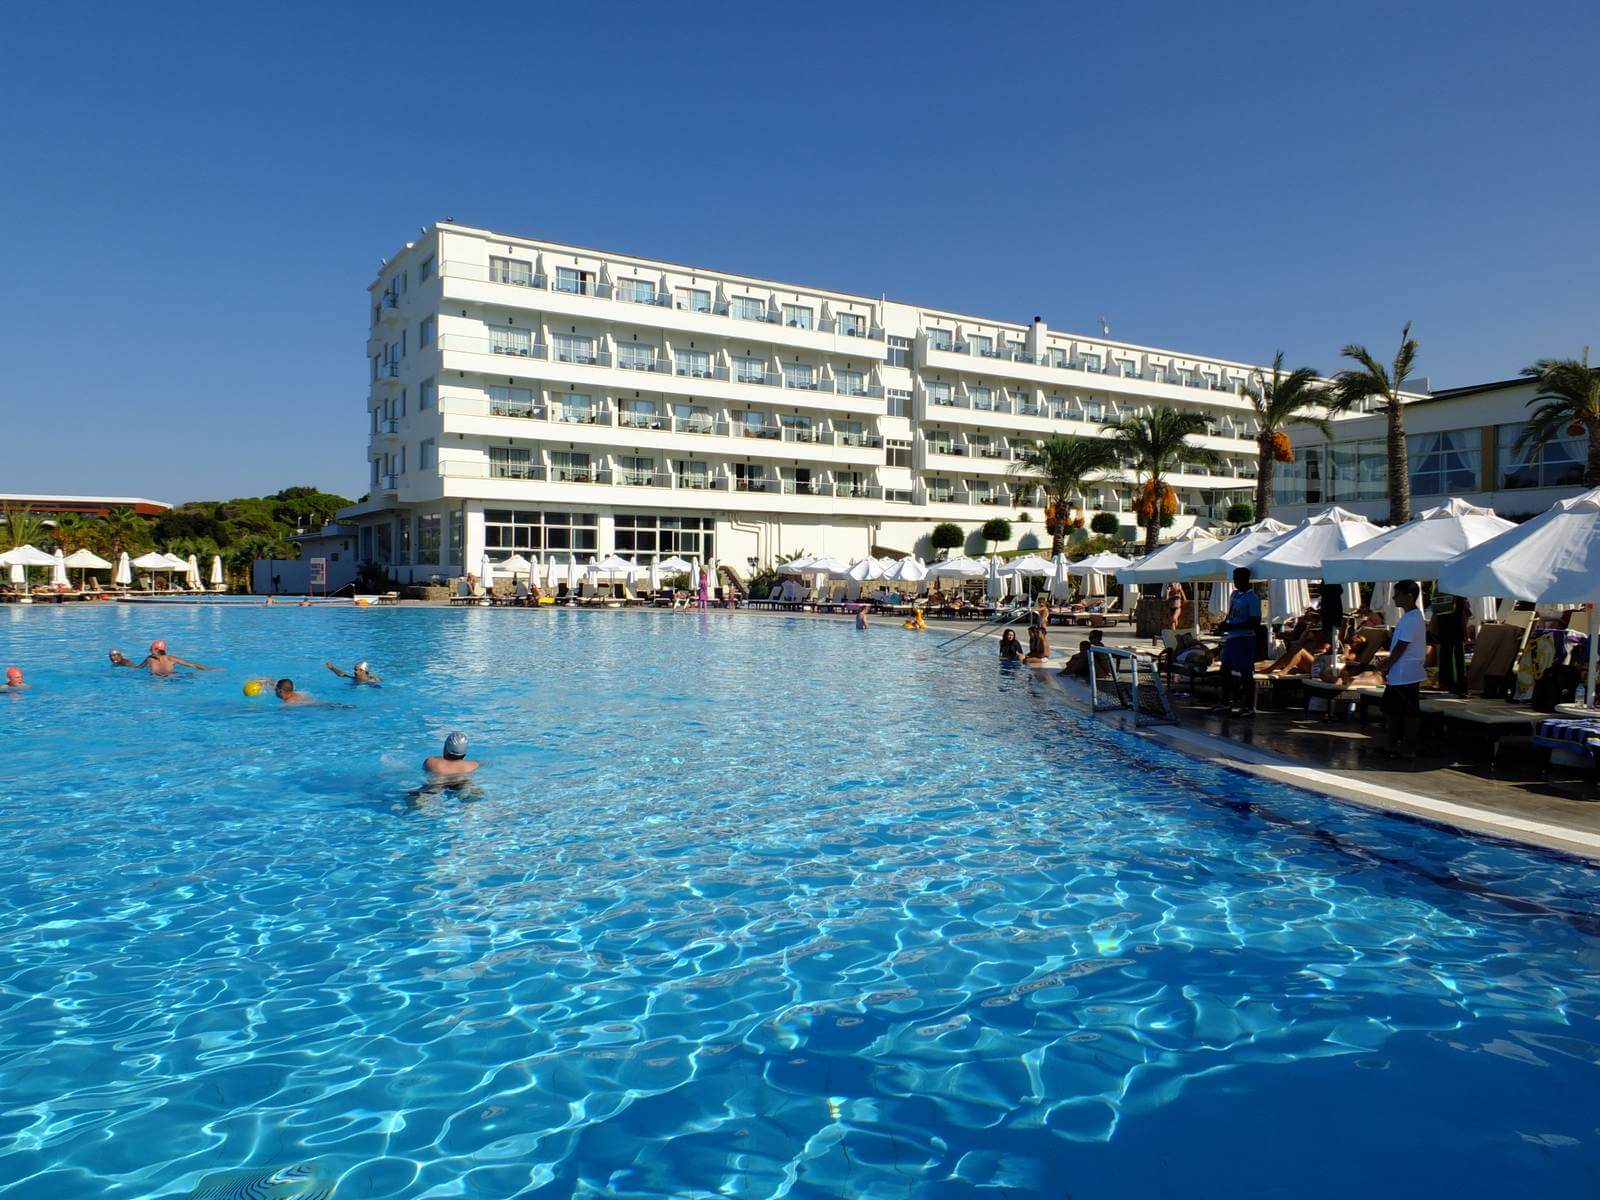 Foto: Hotel Acapulco groer Pool und Hotelgebude - Lupe Reisen